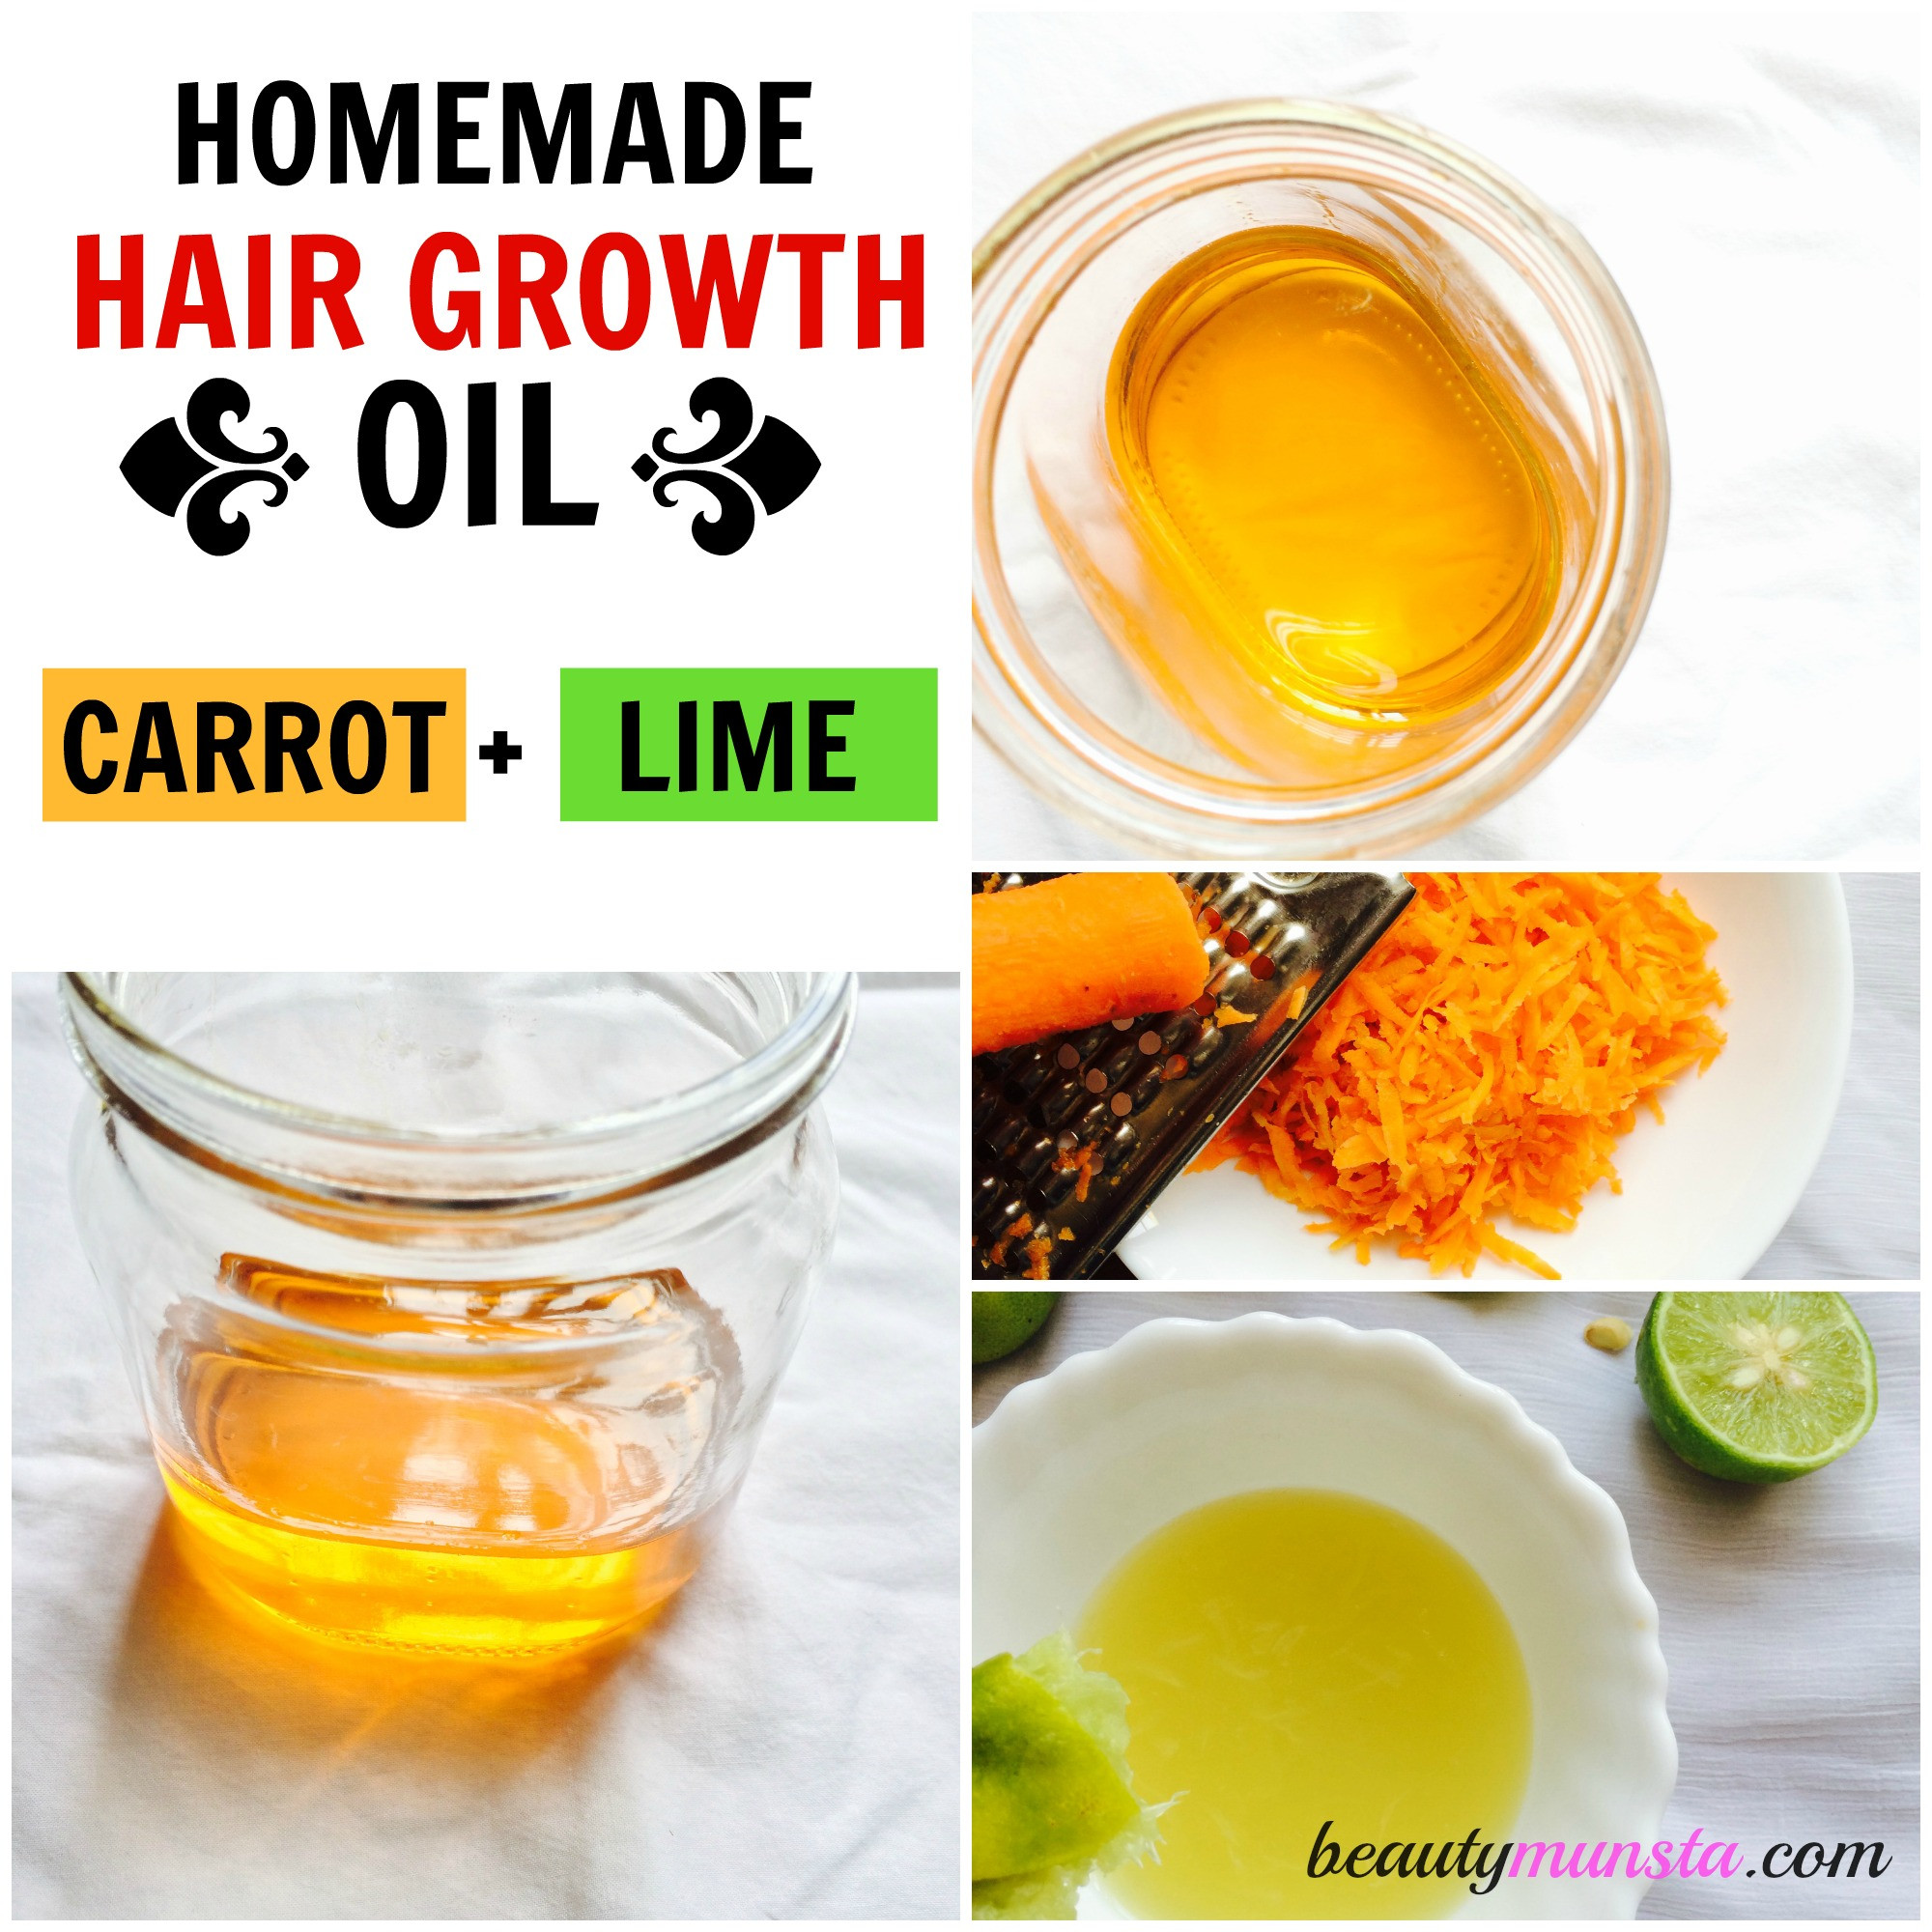 DIY Hair Growth Oil For Natural Hair
 Carrot & Lime Homemade Hair Oil Recipe for Hair Growth